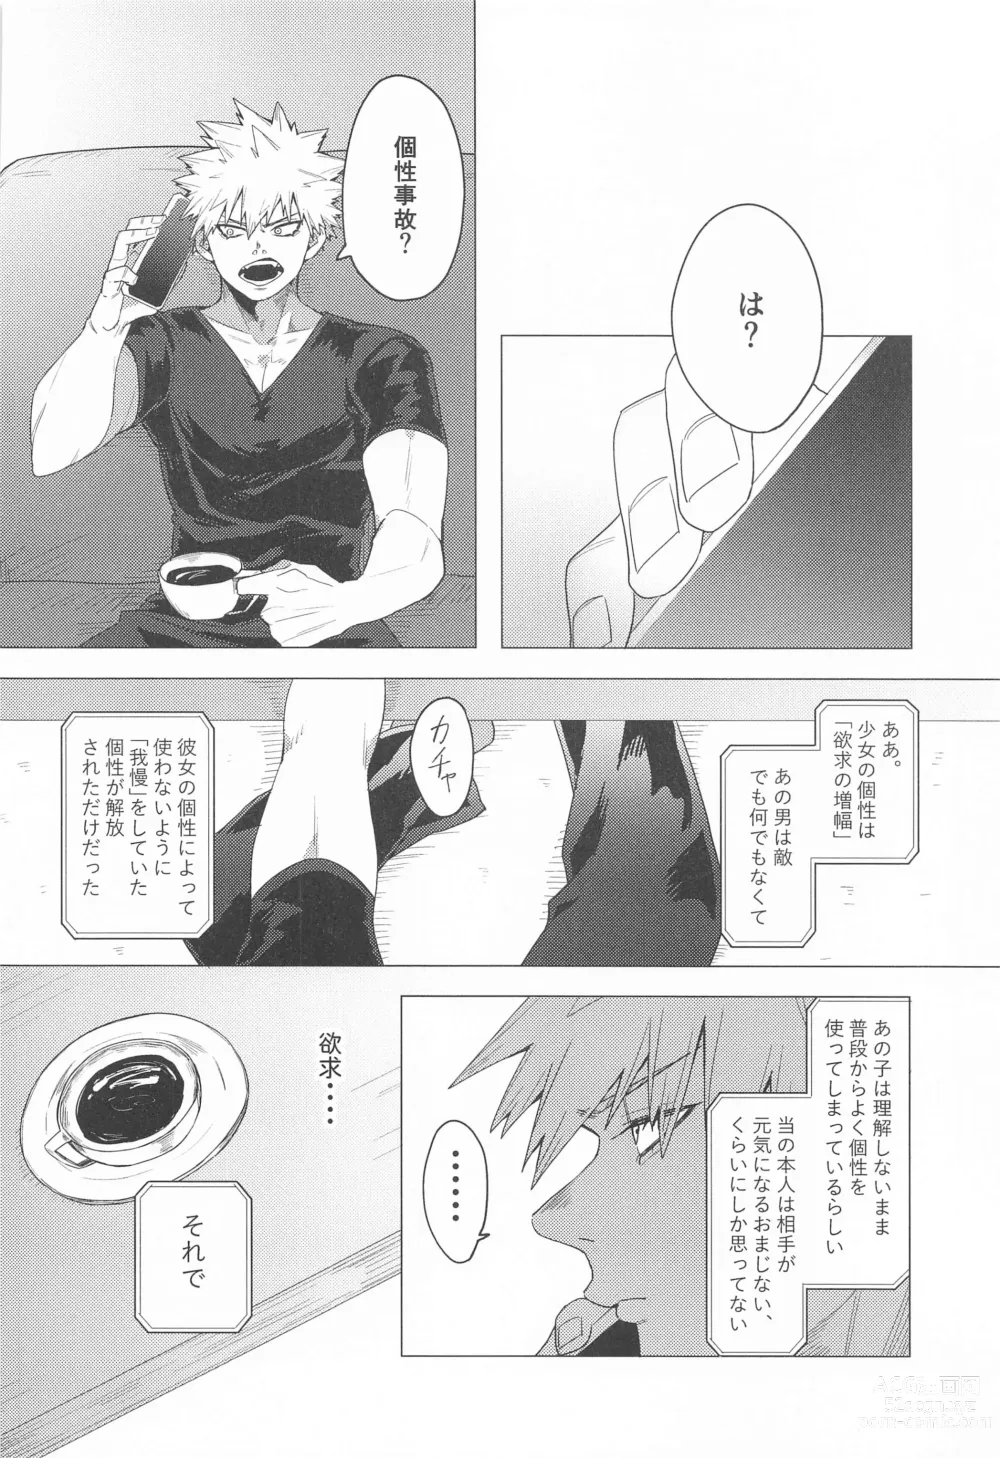 Page 41 of doujinshi Motto Sawatte!